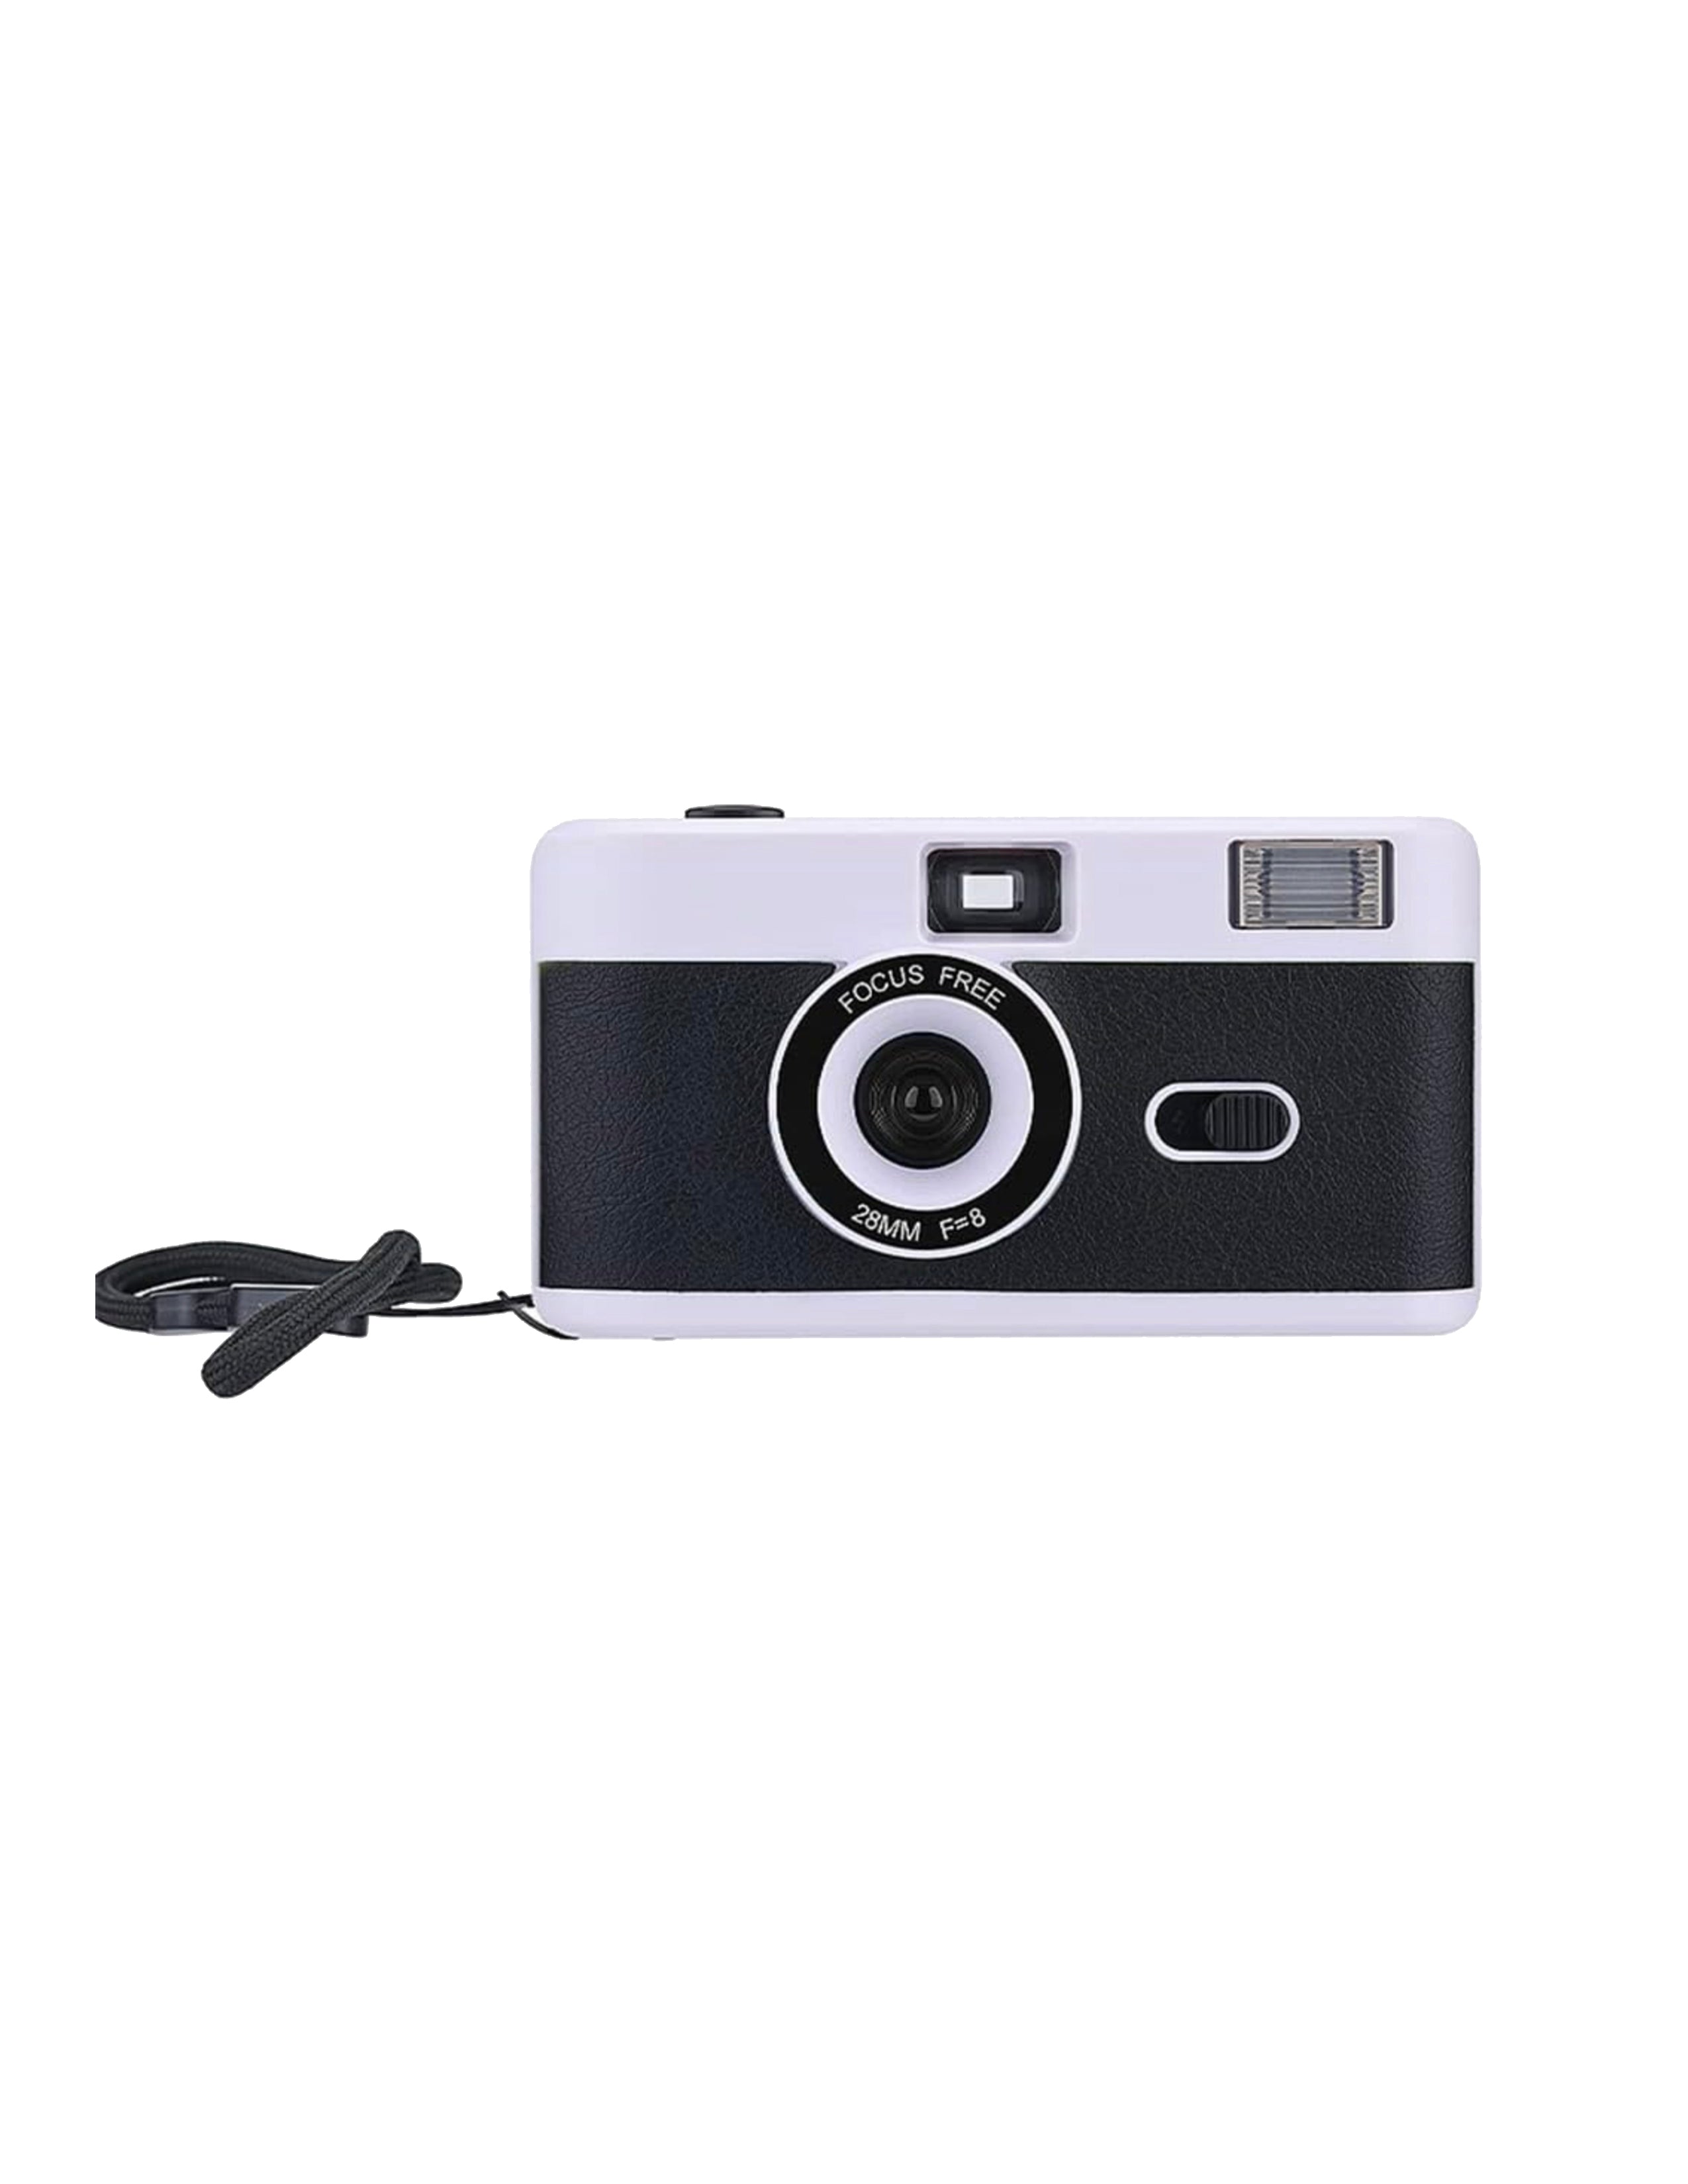 Lola Retro Reusable 35mm Film Camera, Black and White